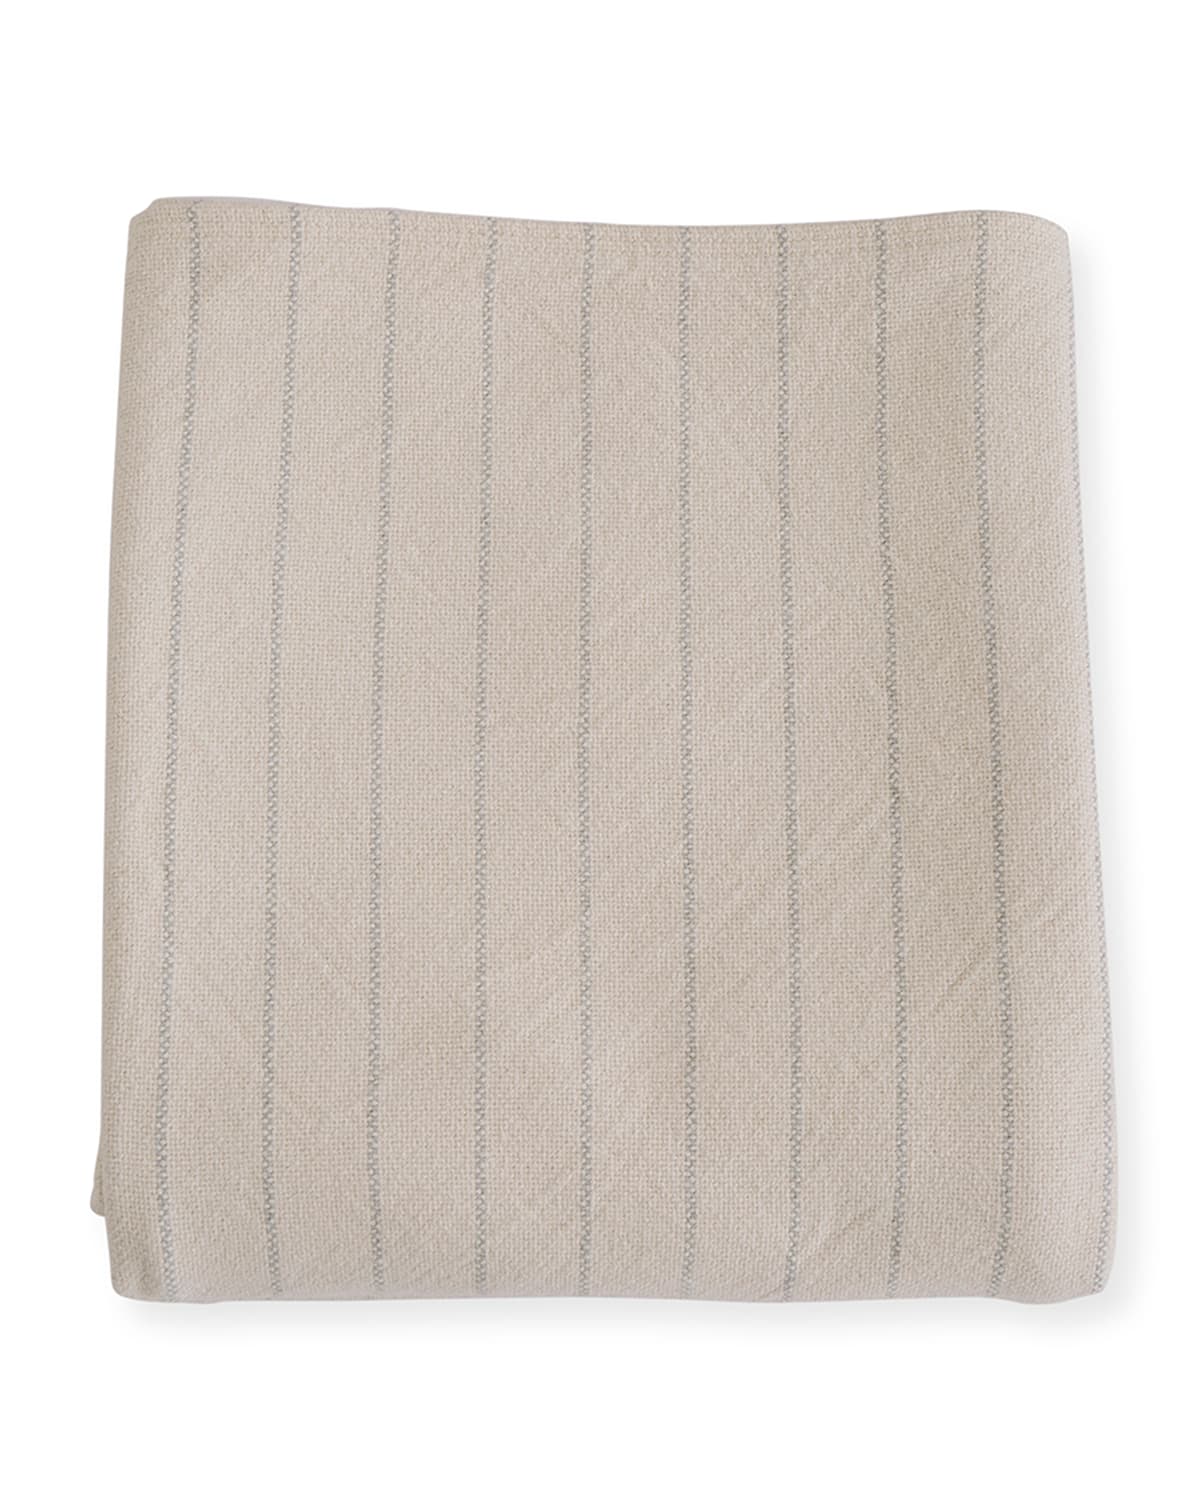 Evangeline Linens Pinstripe Herringbone Cotton King Blanket, Classic Gray In Neutral